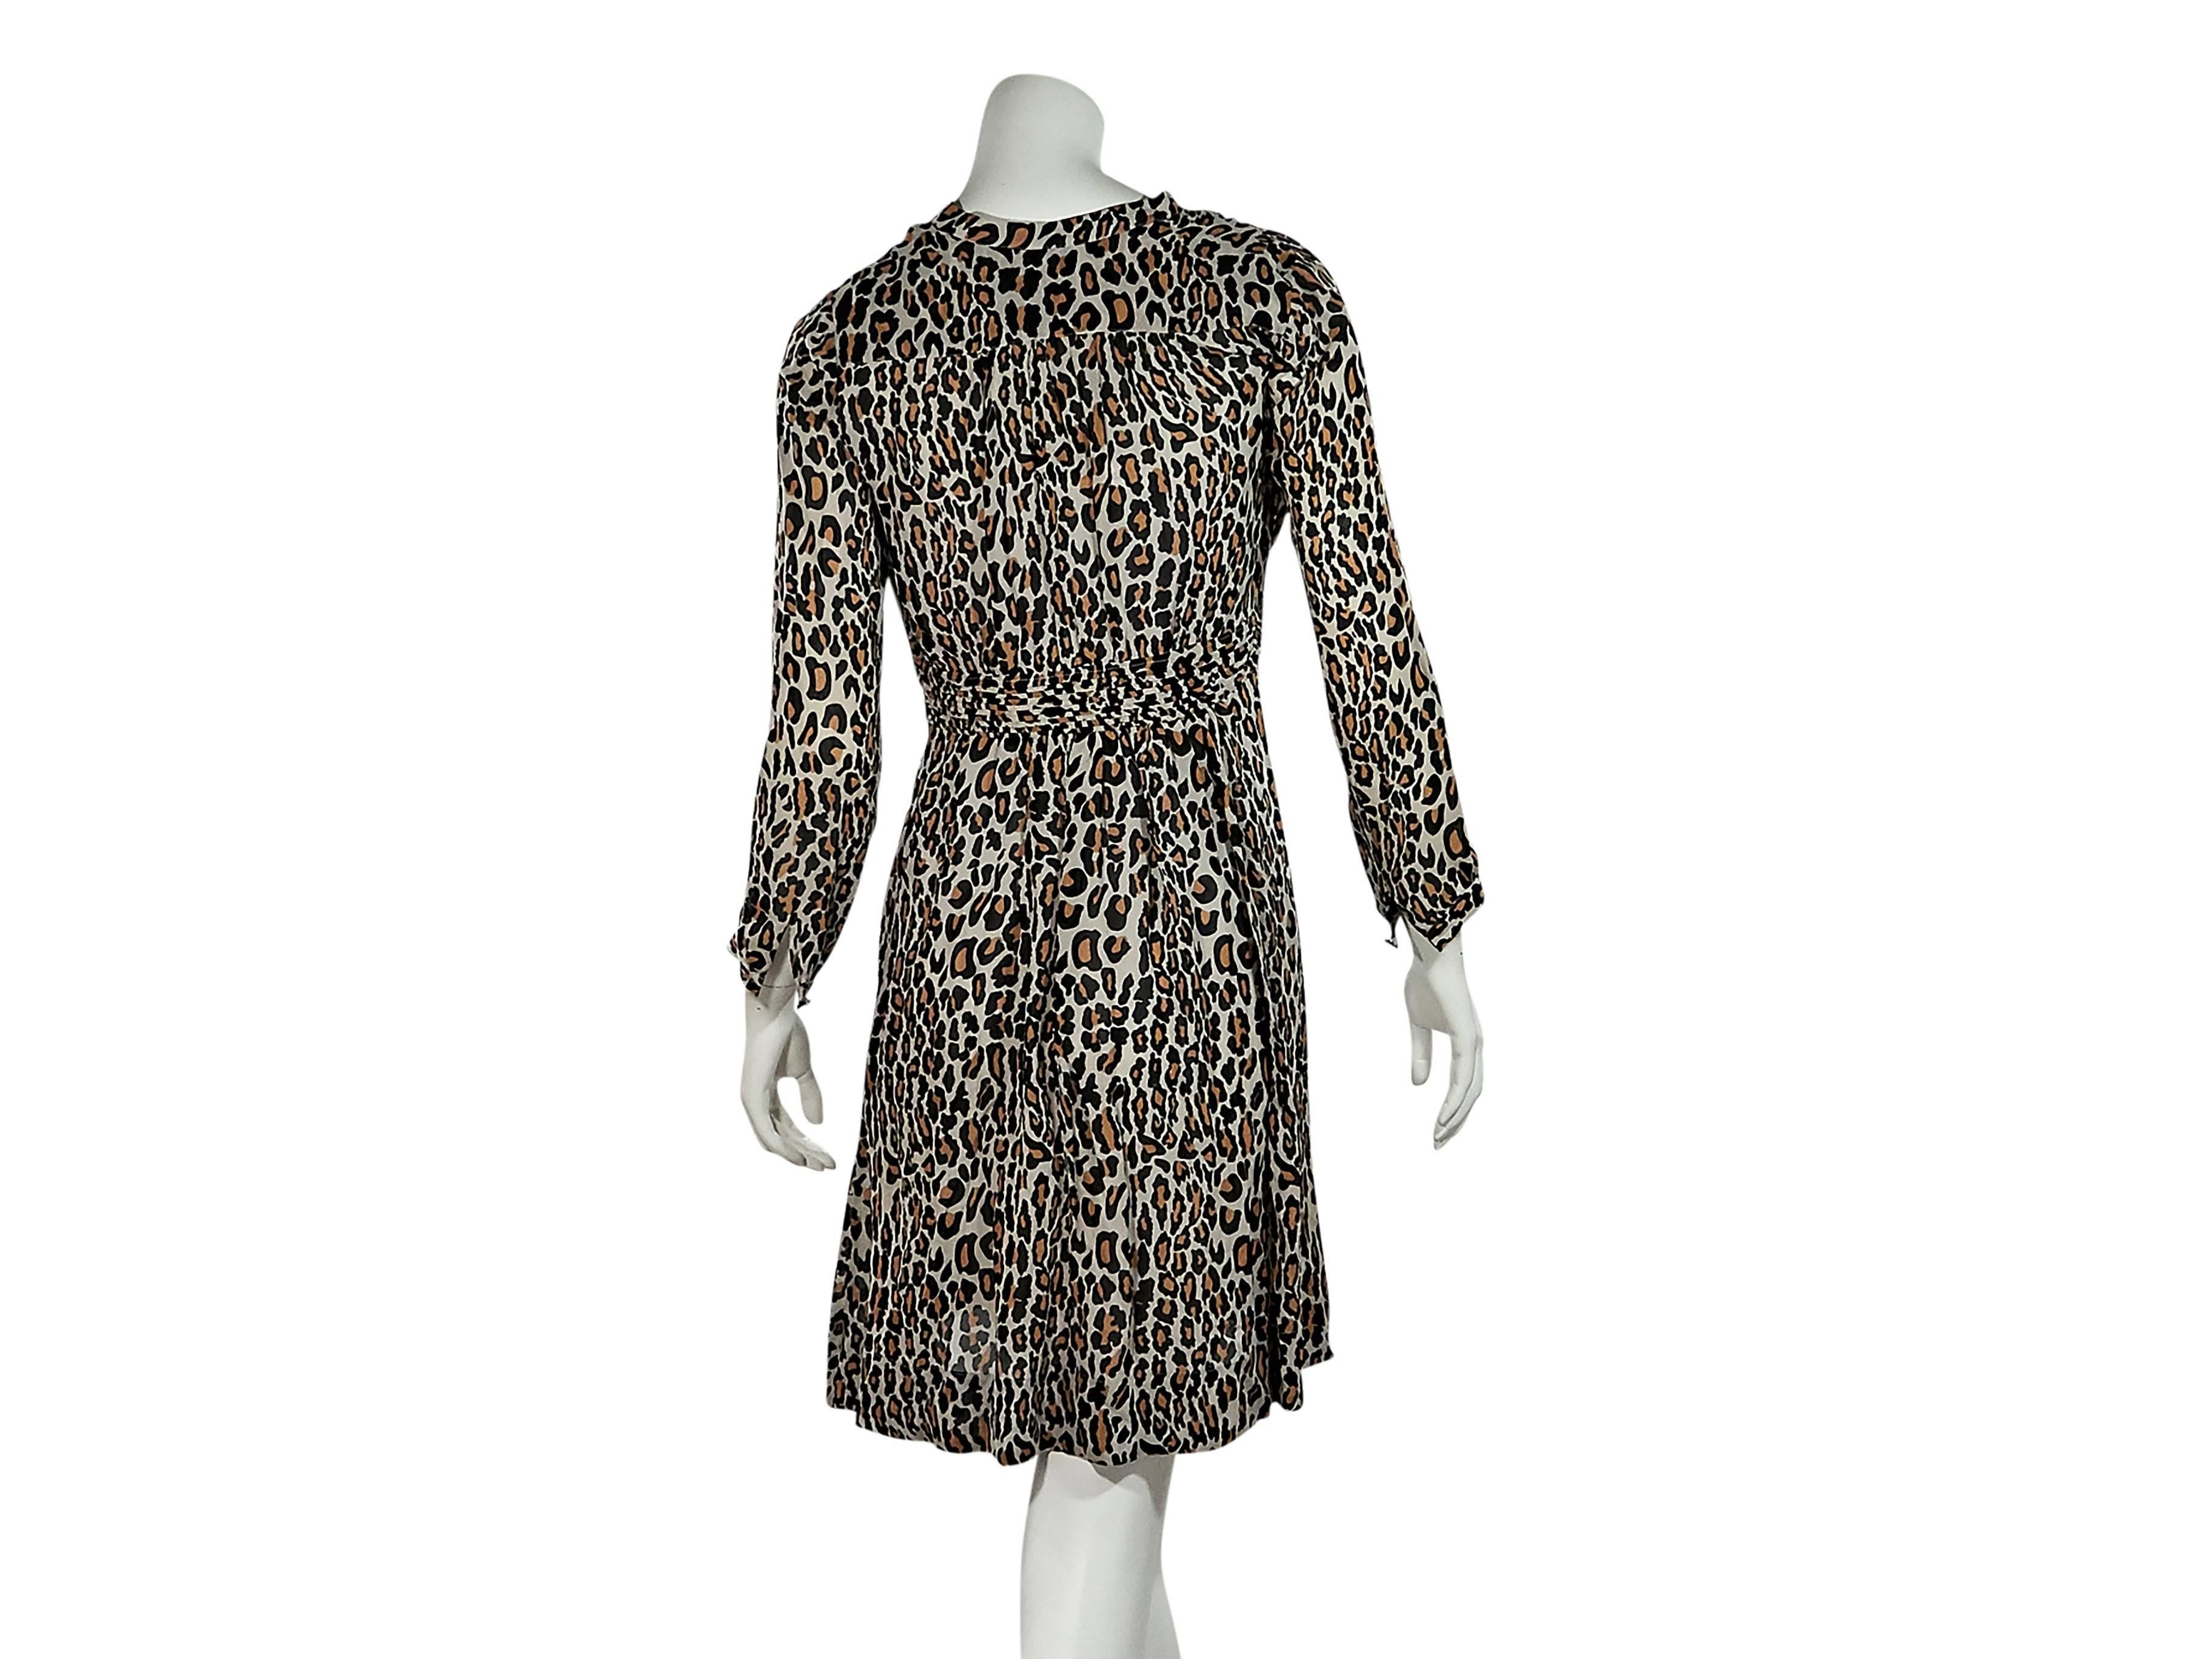 Product details:  Multicolor leopard-print Herta dress by Baum und Pferdgarten.  V-neck.  Bracelet-length sleeves.  Button placket.  Pleated Empire waist. Bust is 30